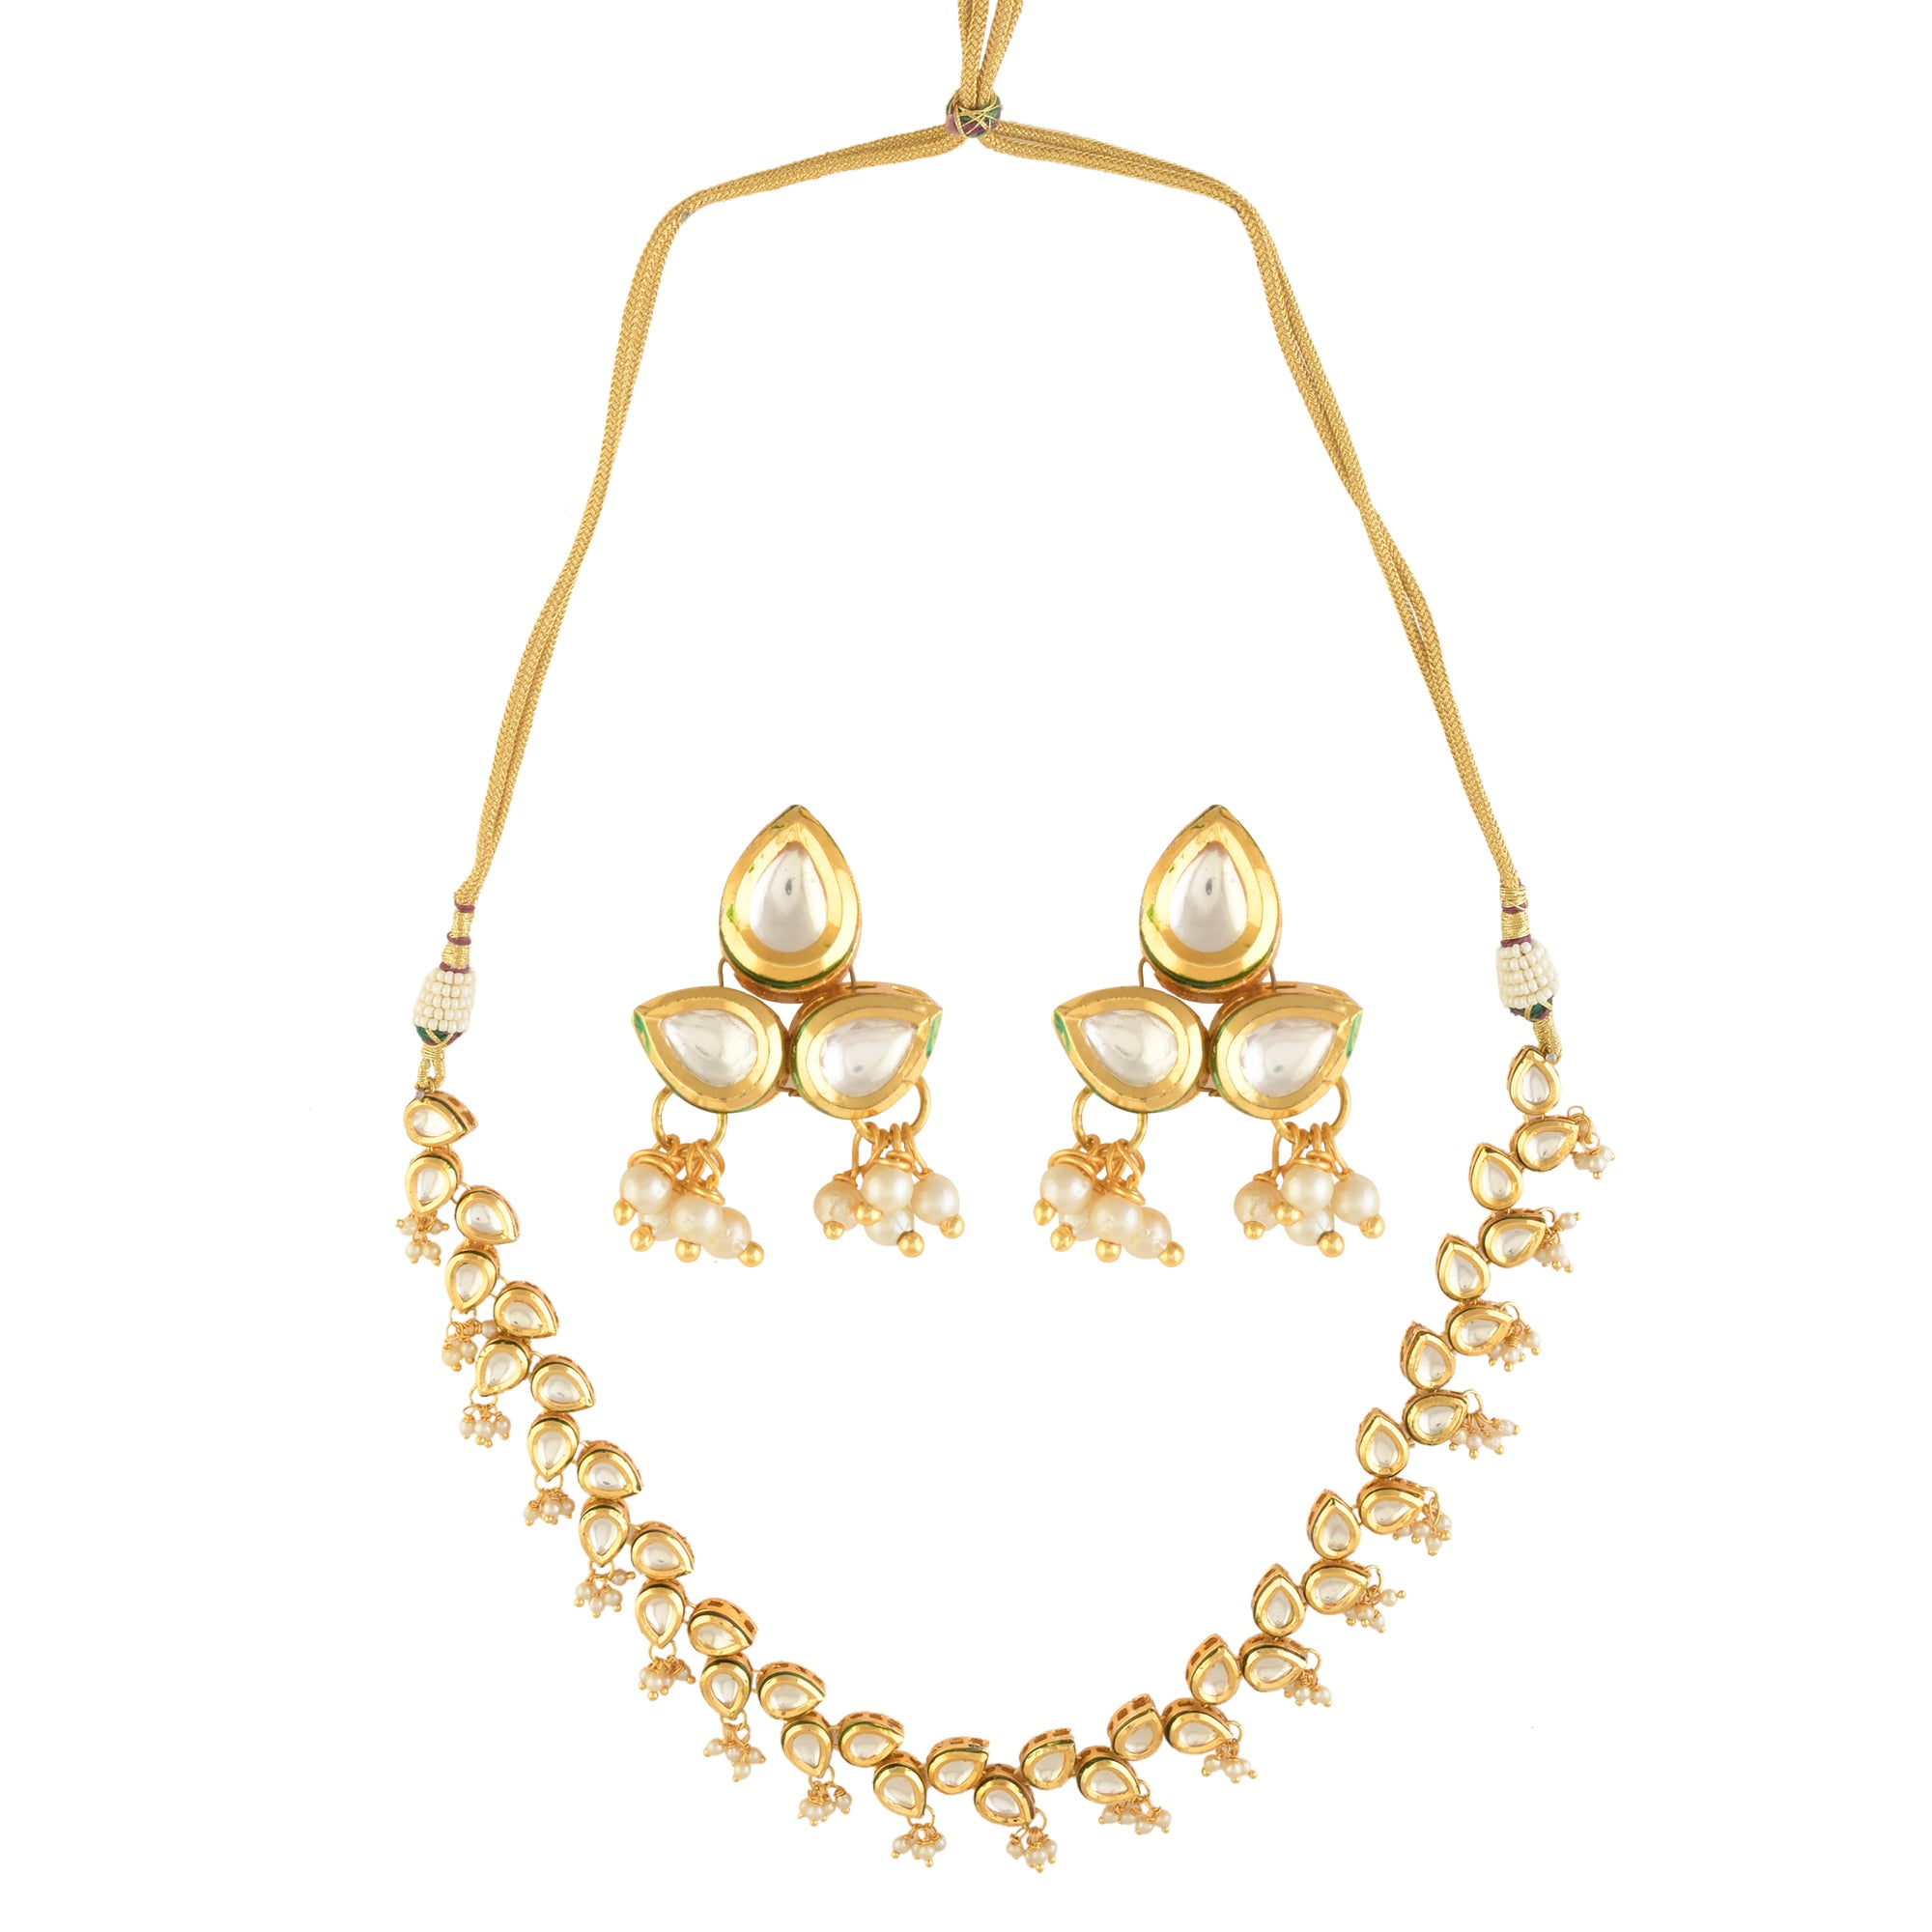 Elegant Tear drop shaped necklace with earrings